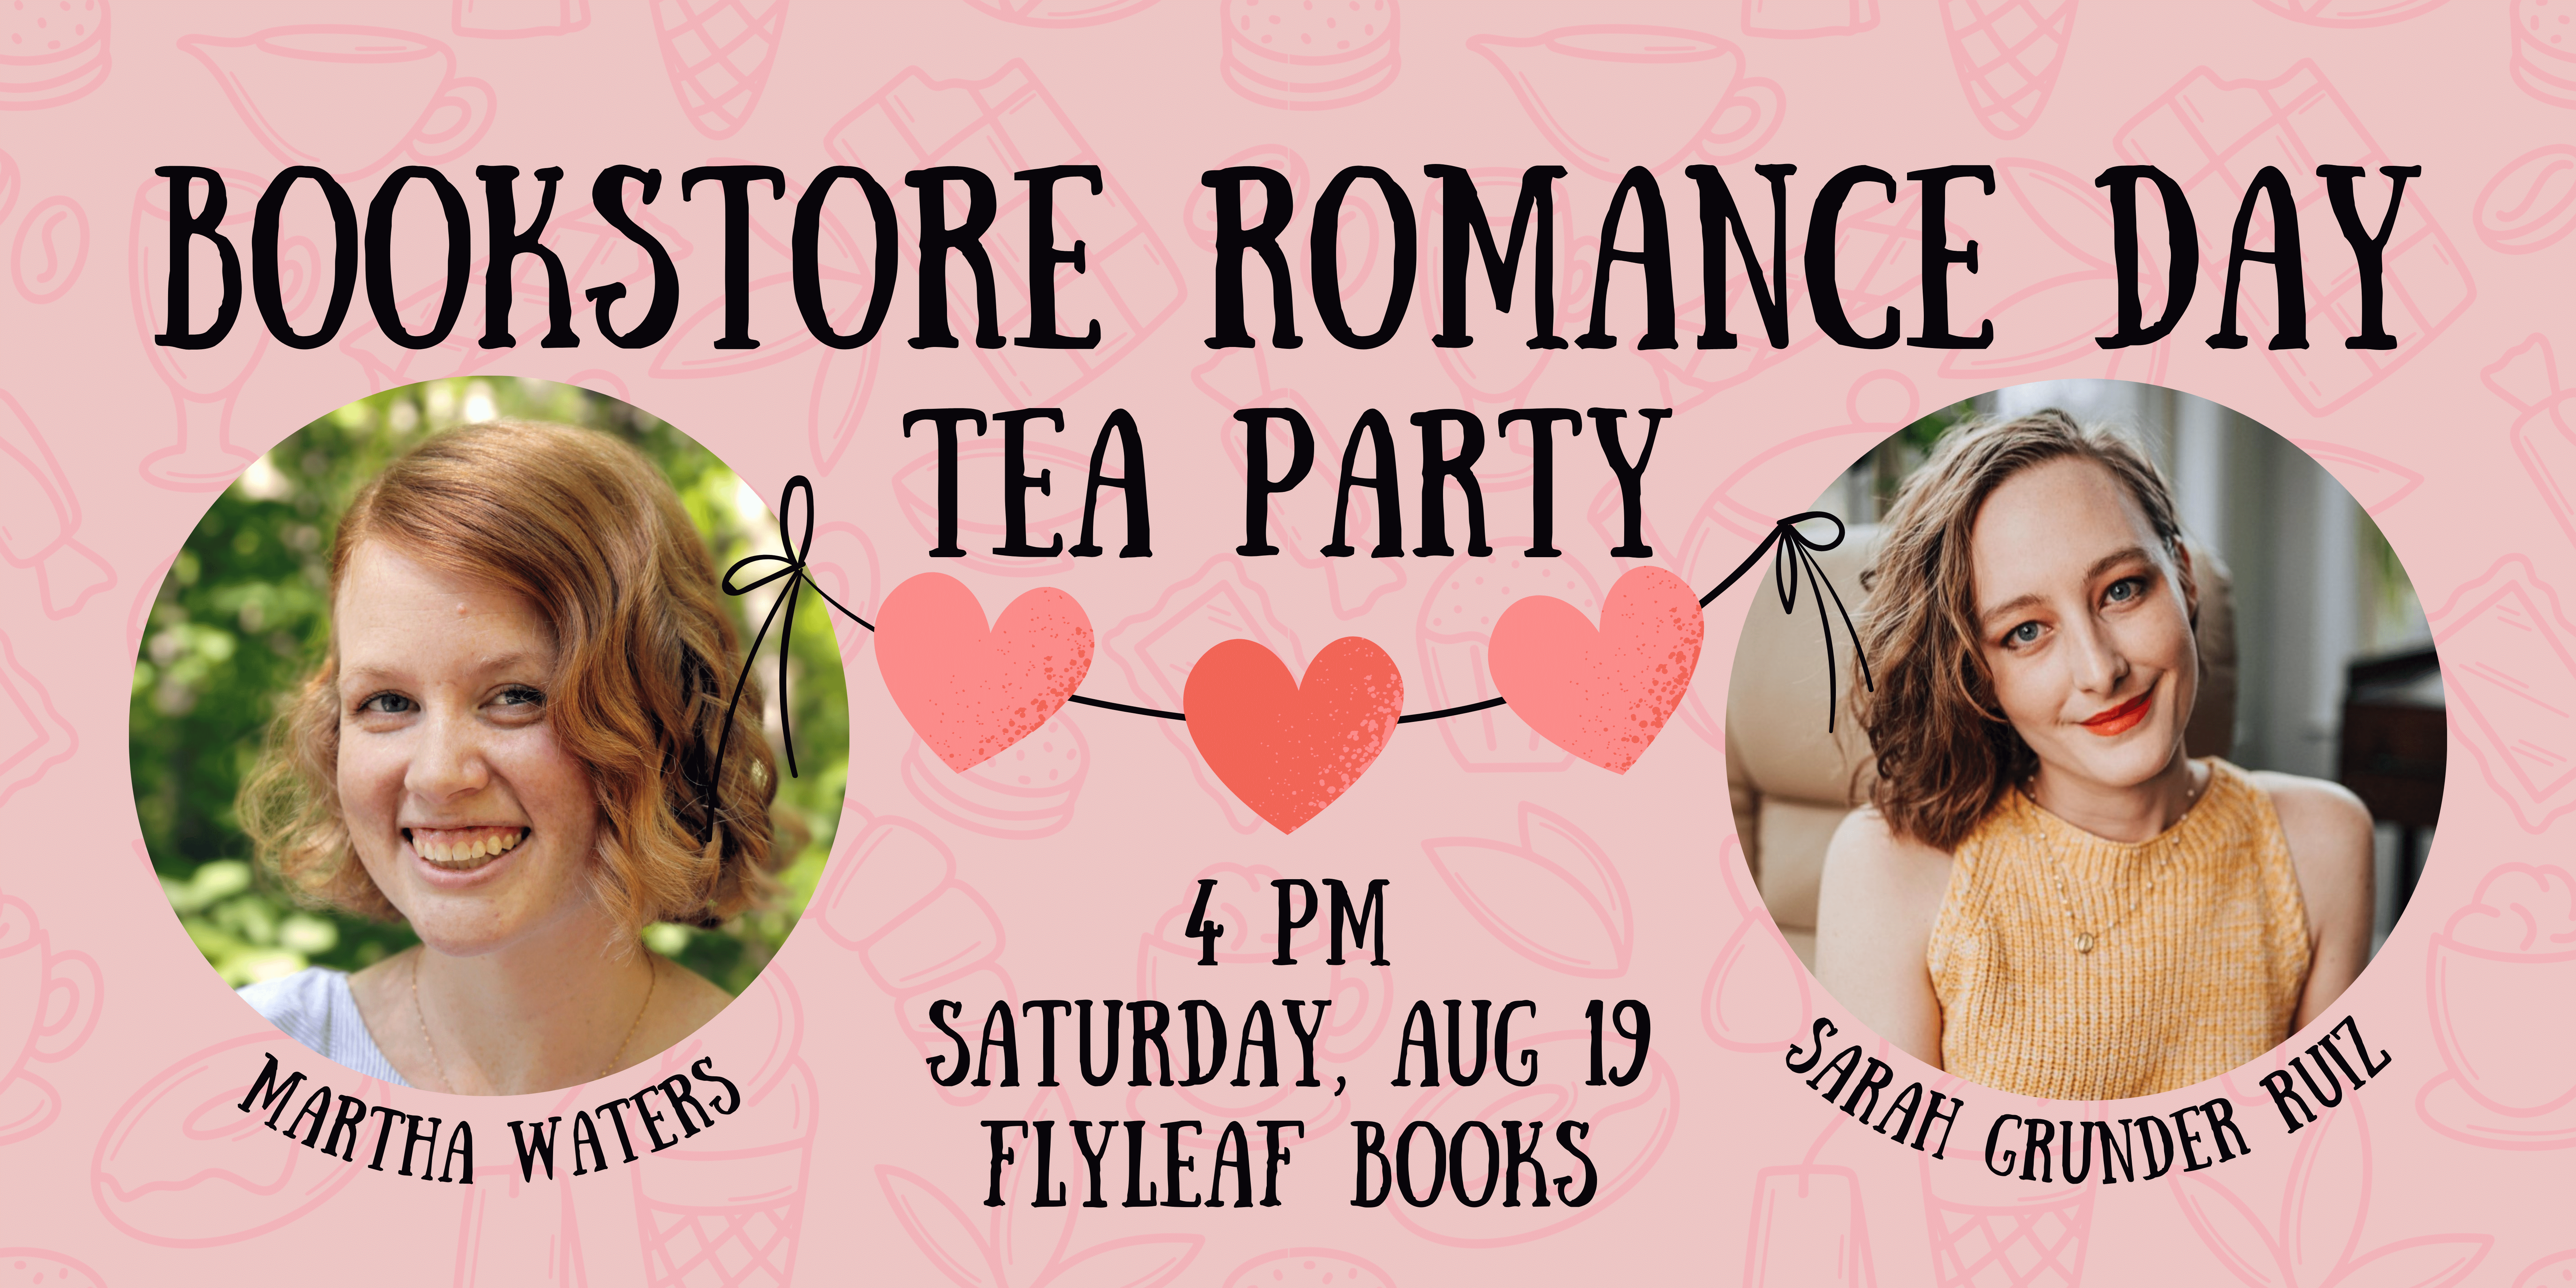 Bookstore Romance Day tea party